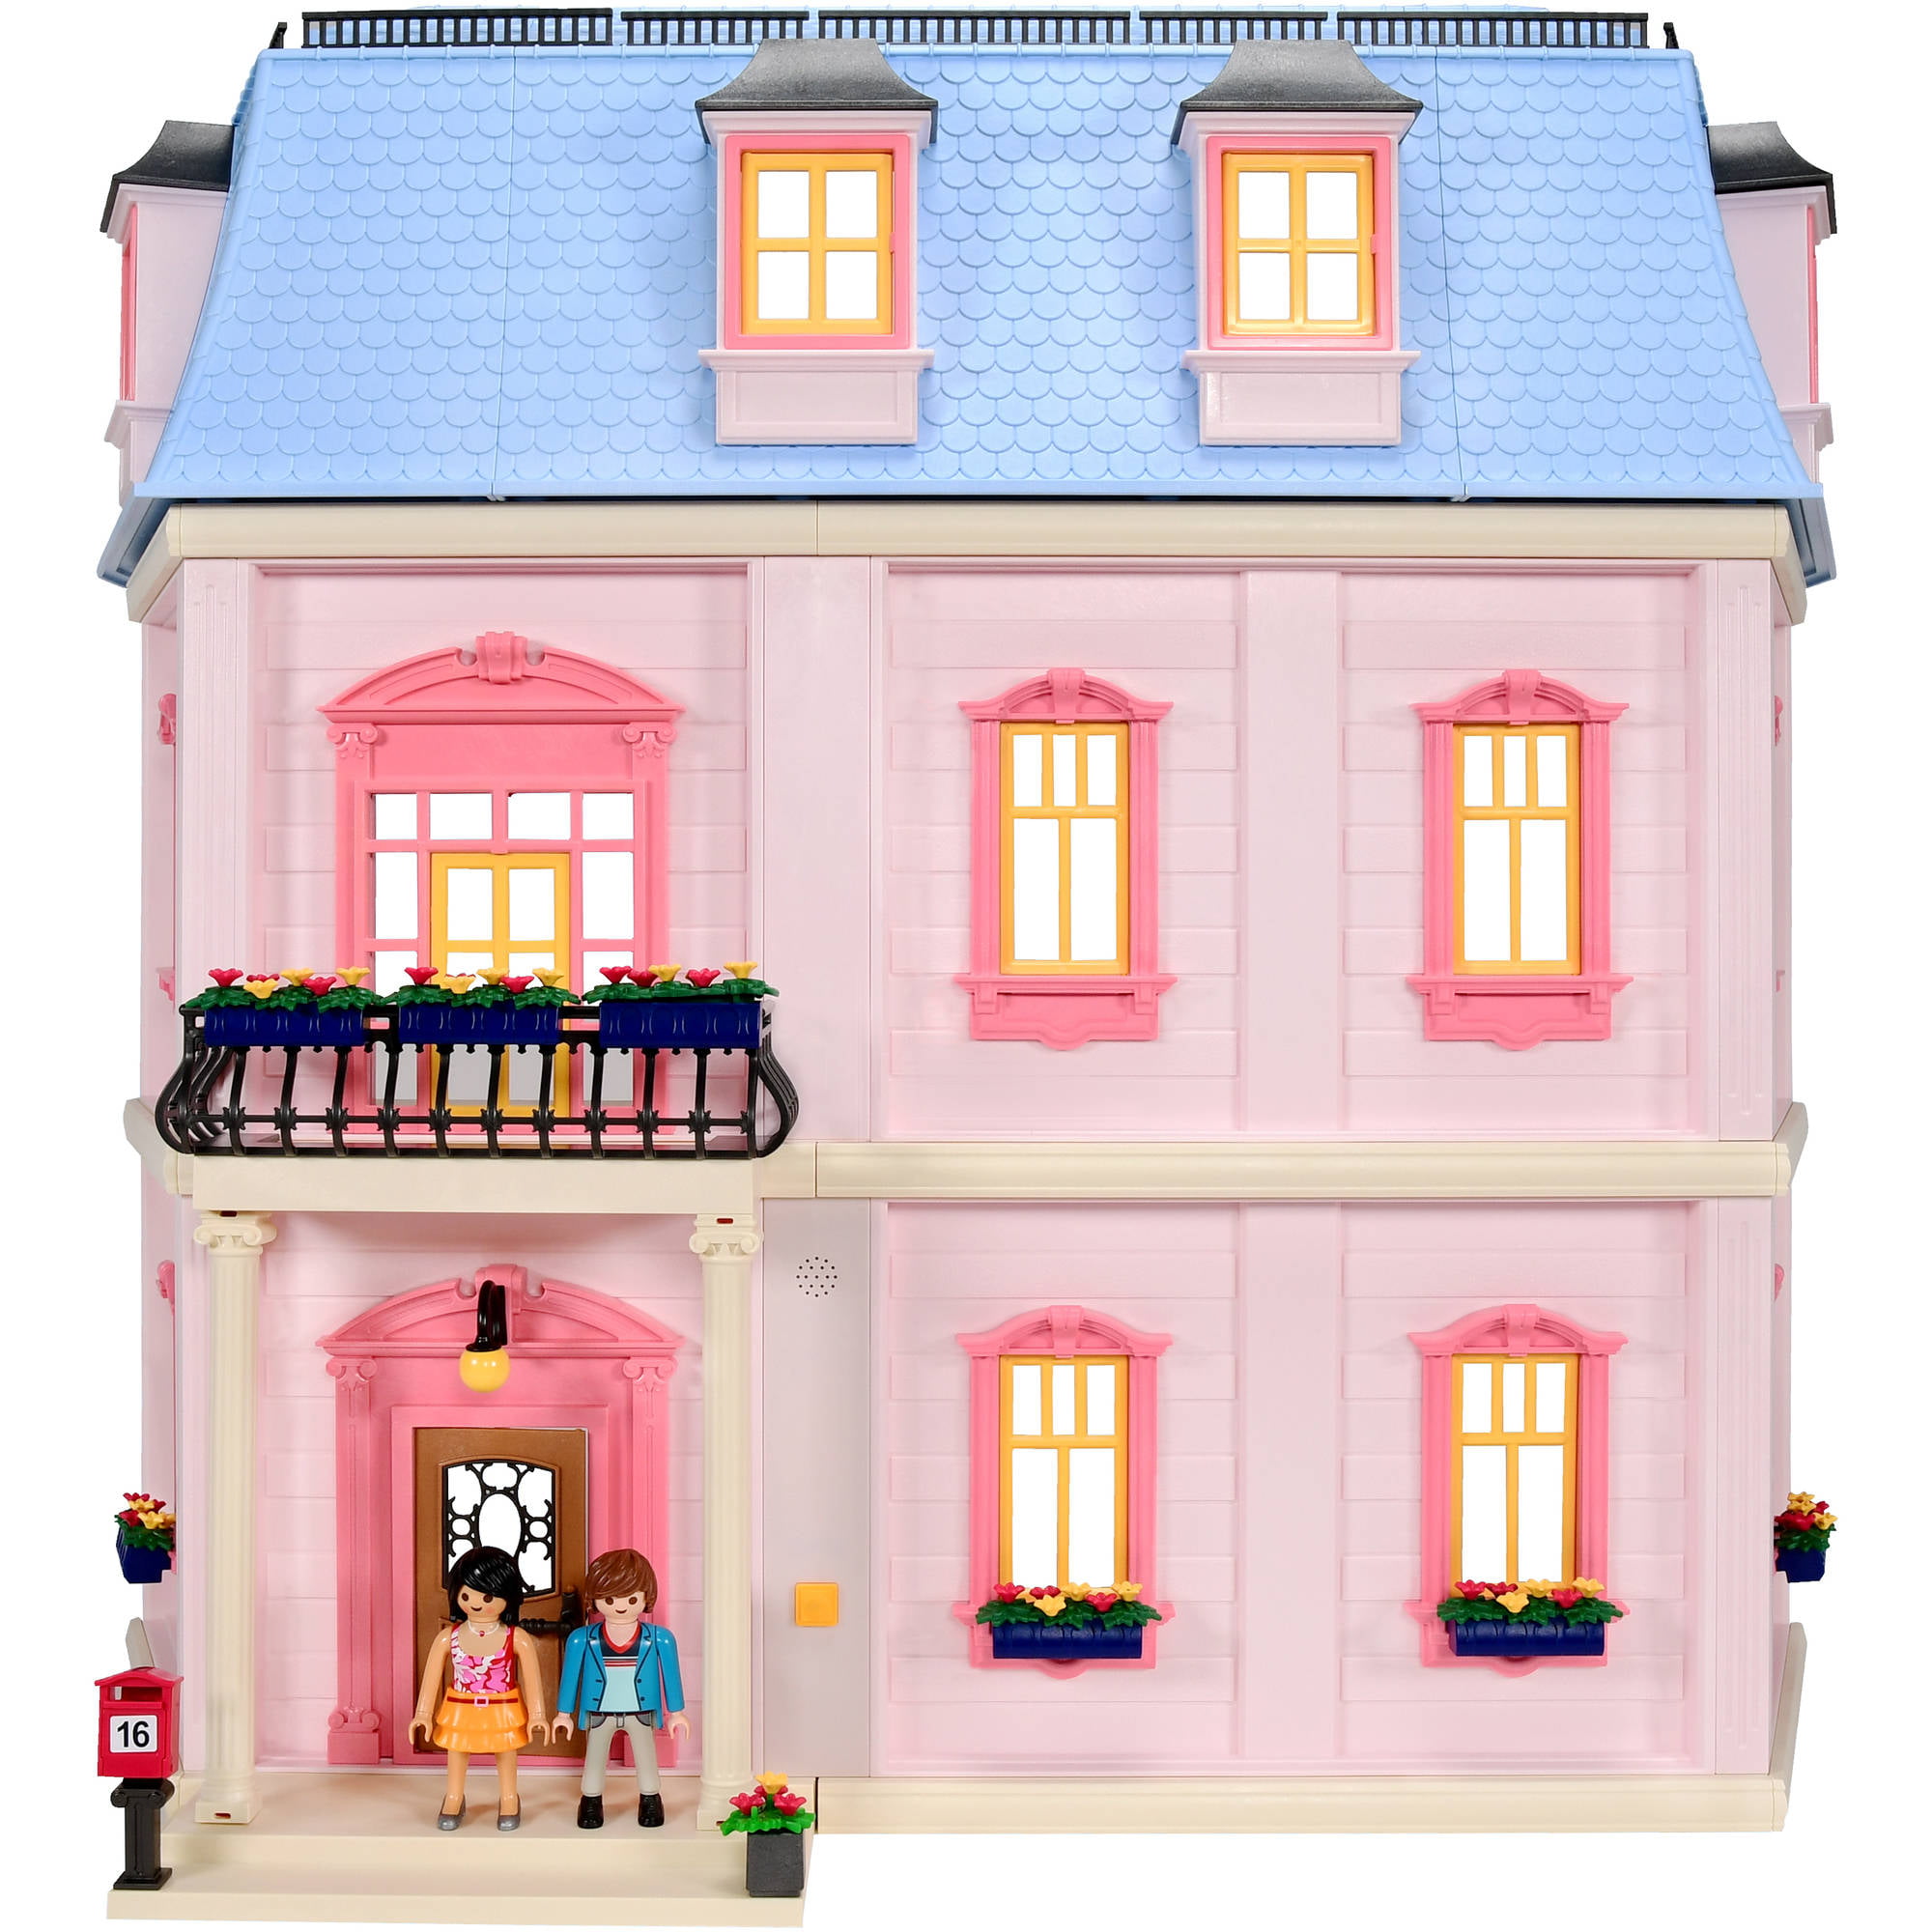 PLAYMOBIL Deluxe Dollhouse